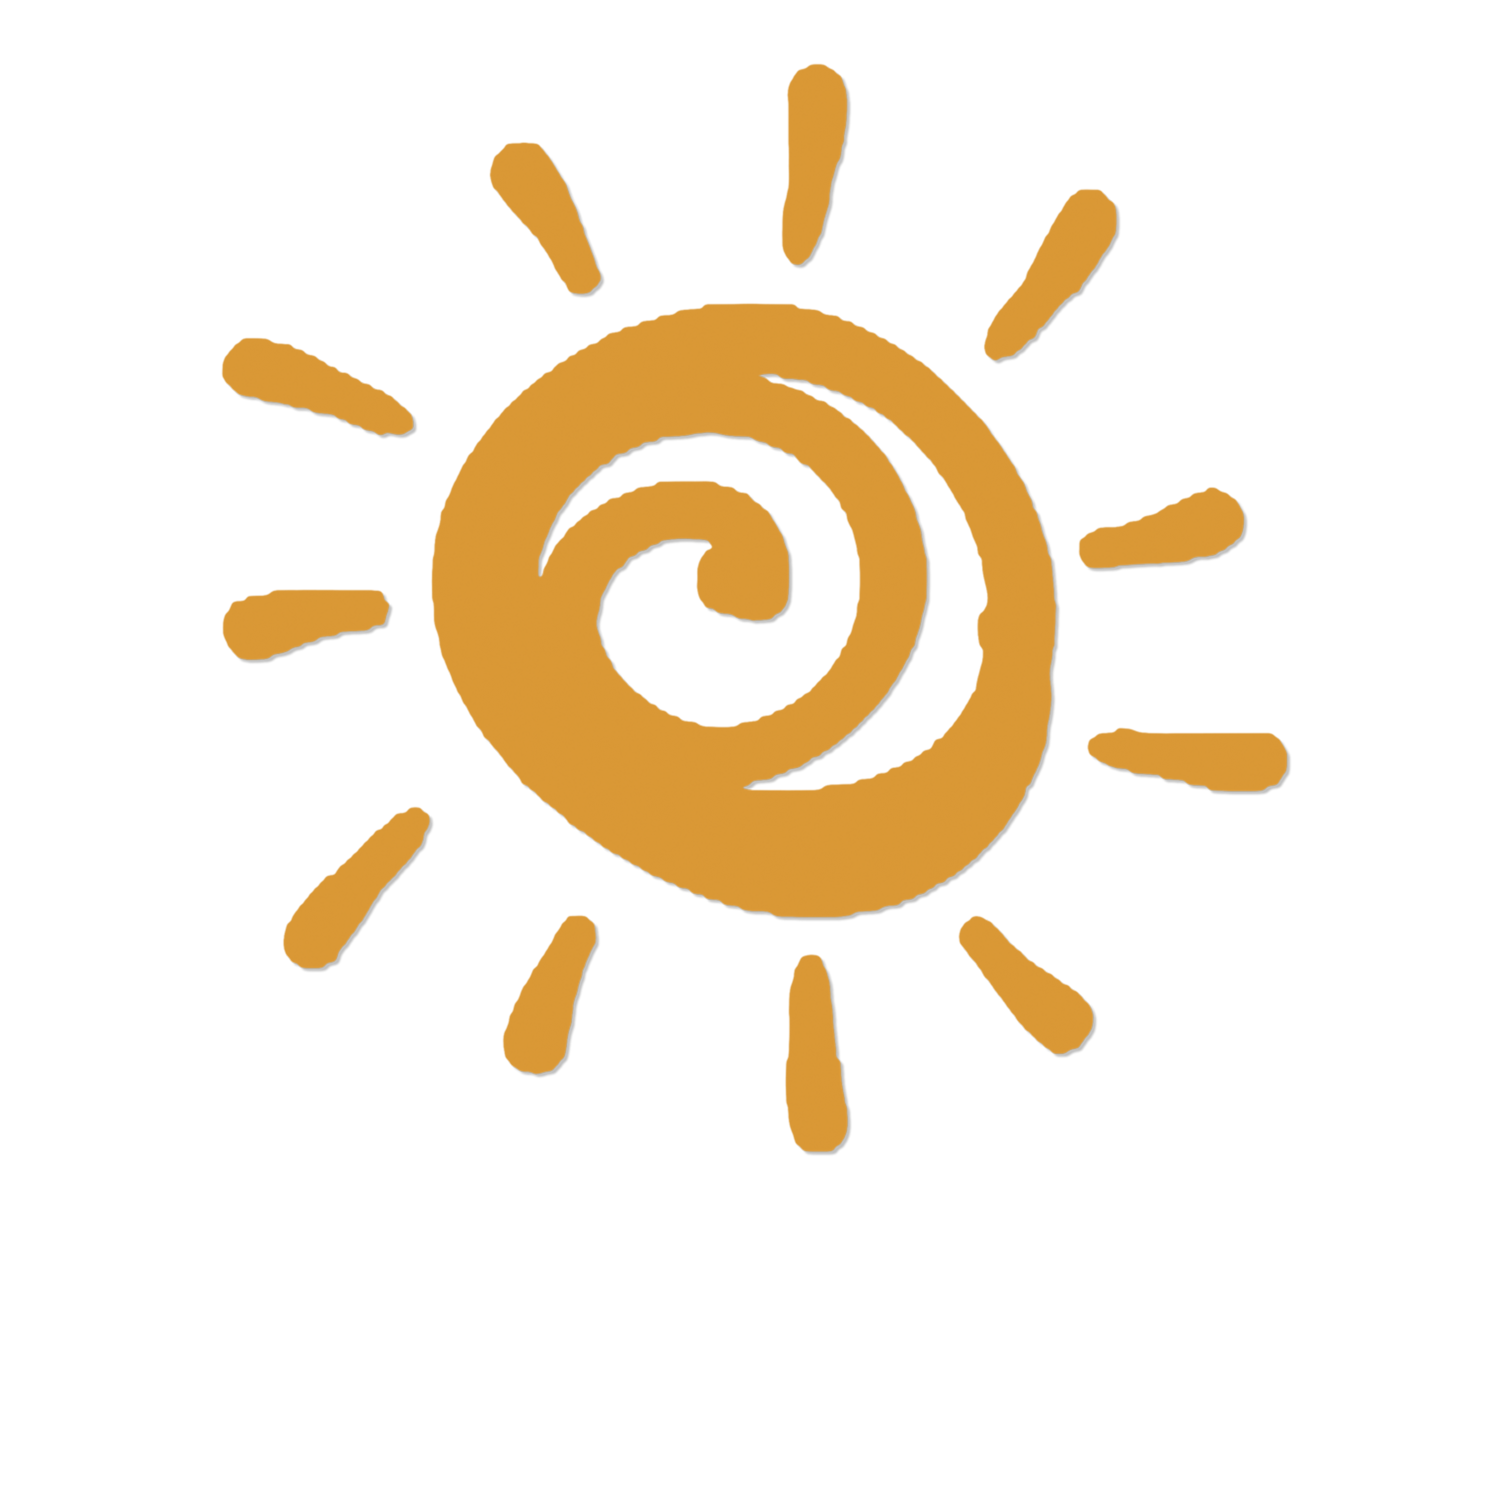 Borrego Springs Youth and Seniors Center